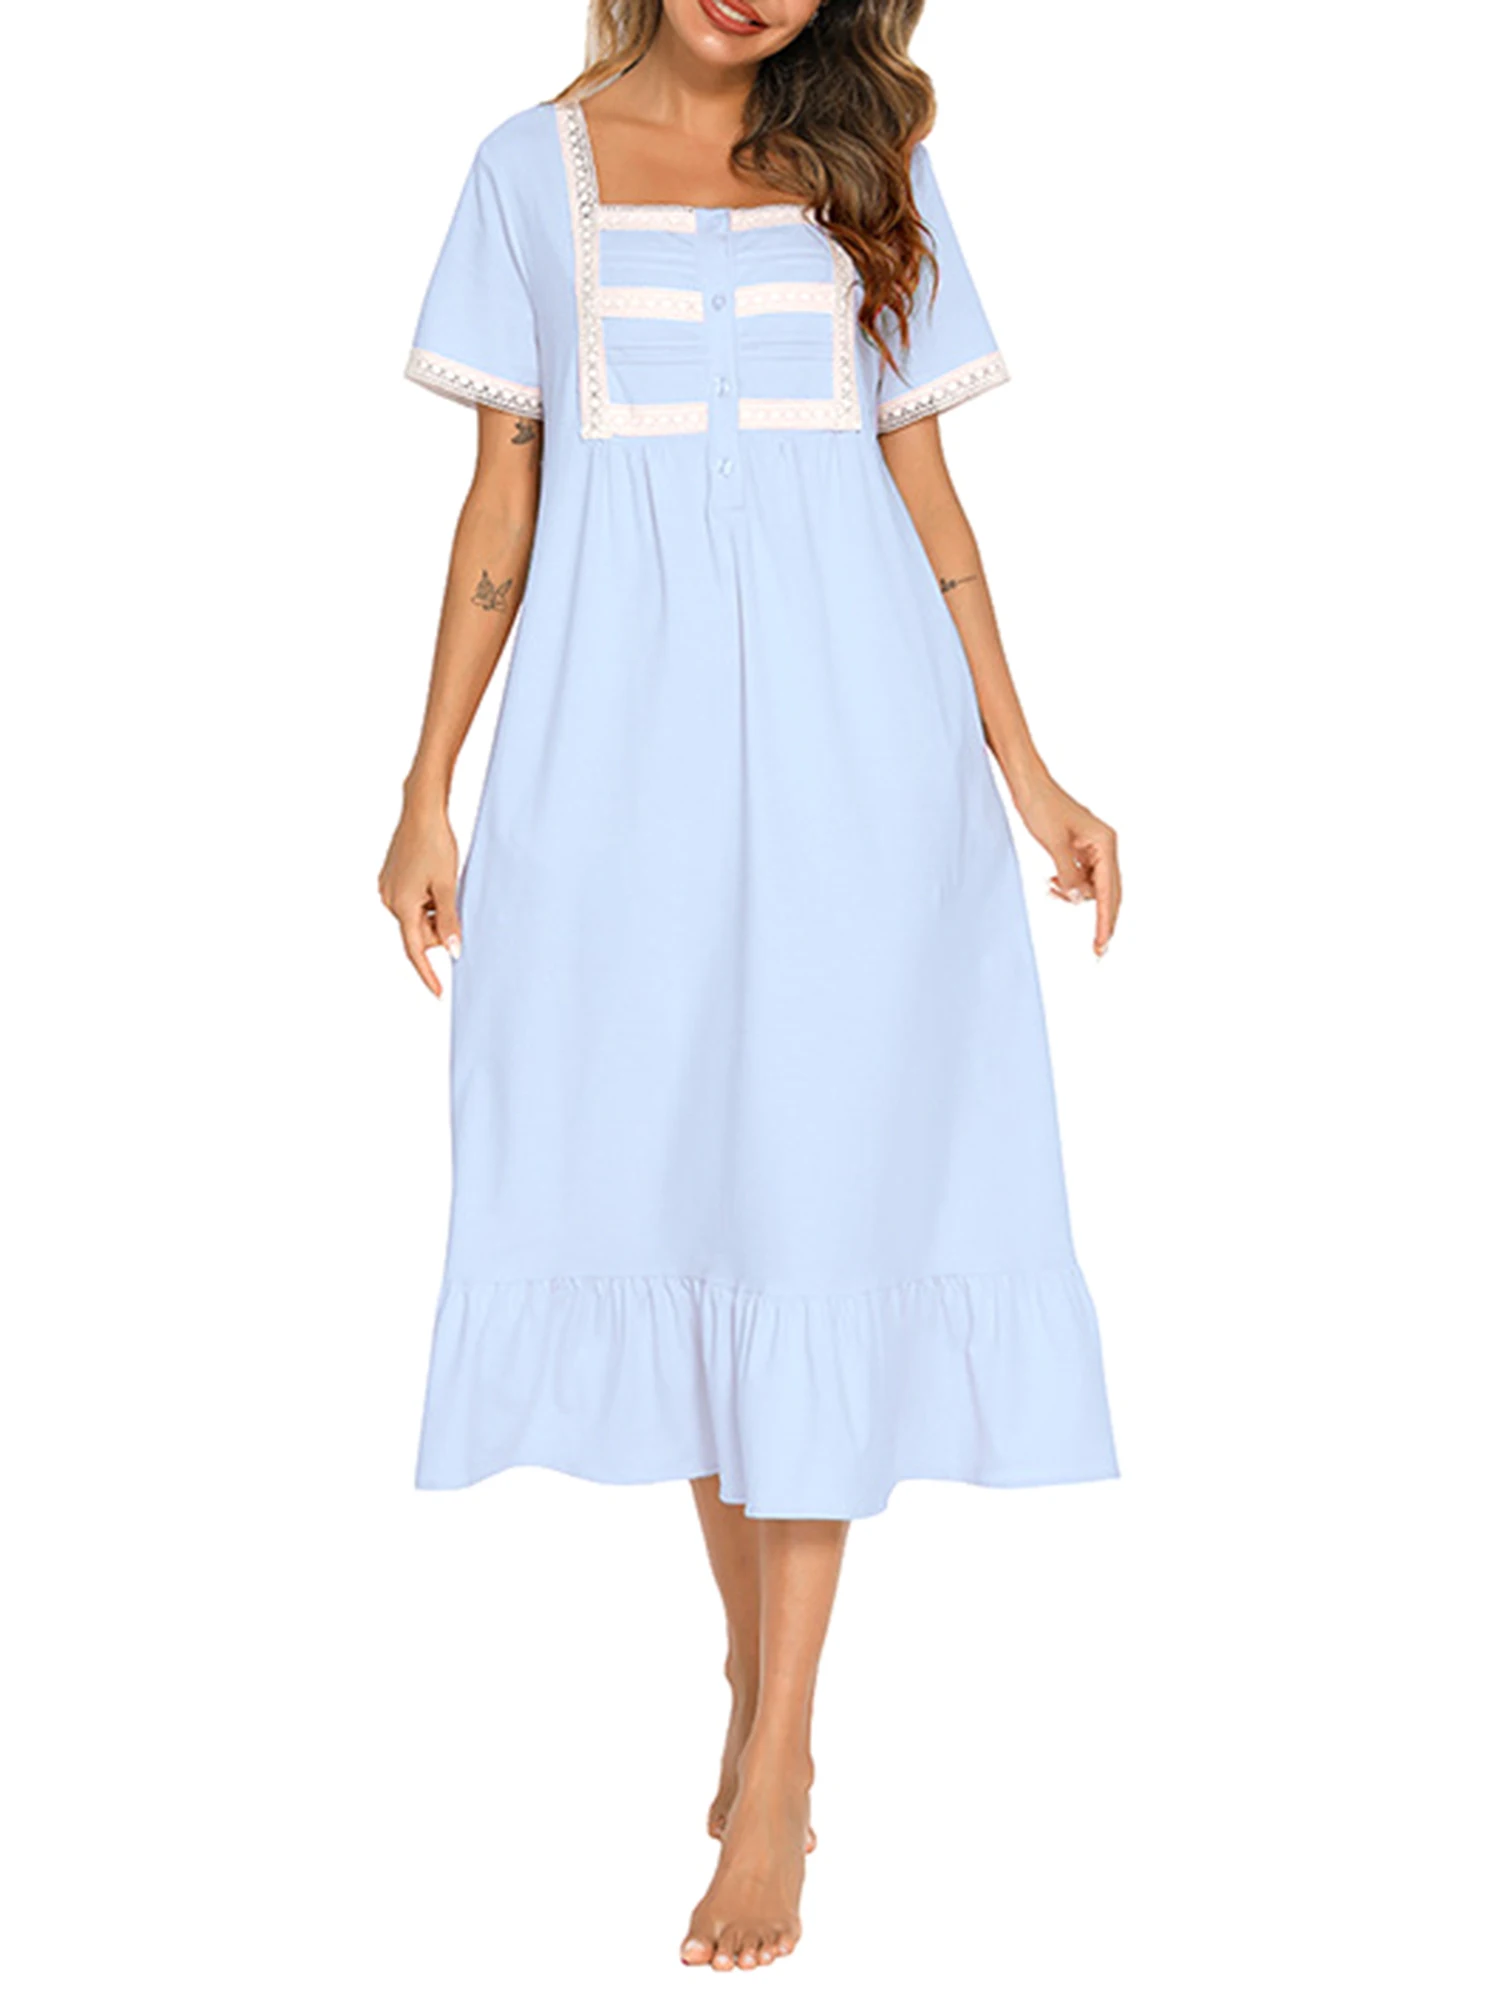 

Elegant Lace Trimmed Short Sleeve Nightgown with Ruffled Hem for Women - Perfect Summer Sleepwear Dress